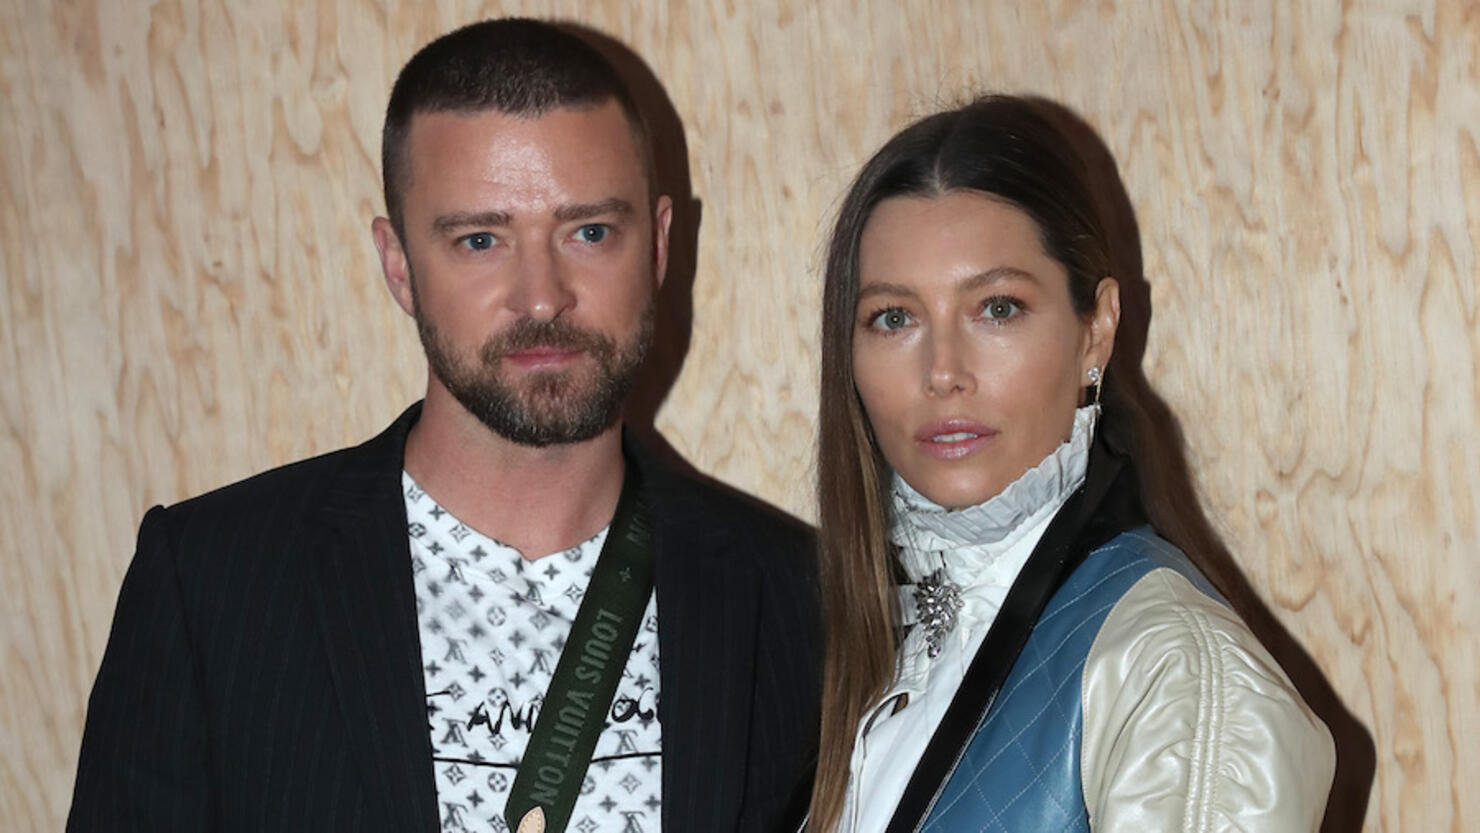 Justin Timberlake Returns to Work After Alisha Wainwright PDA